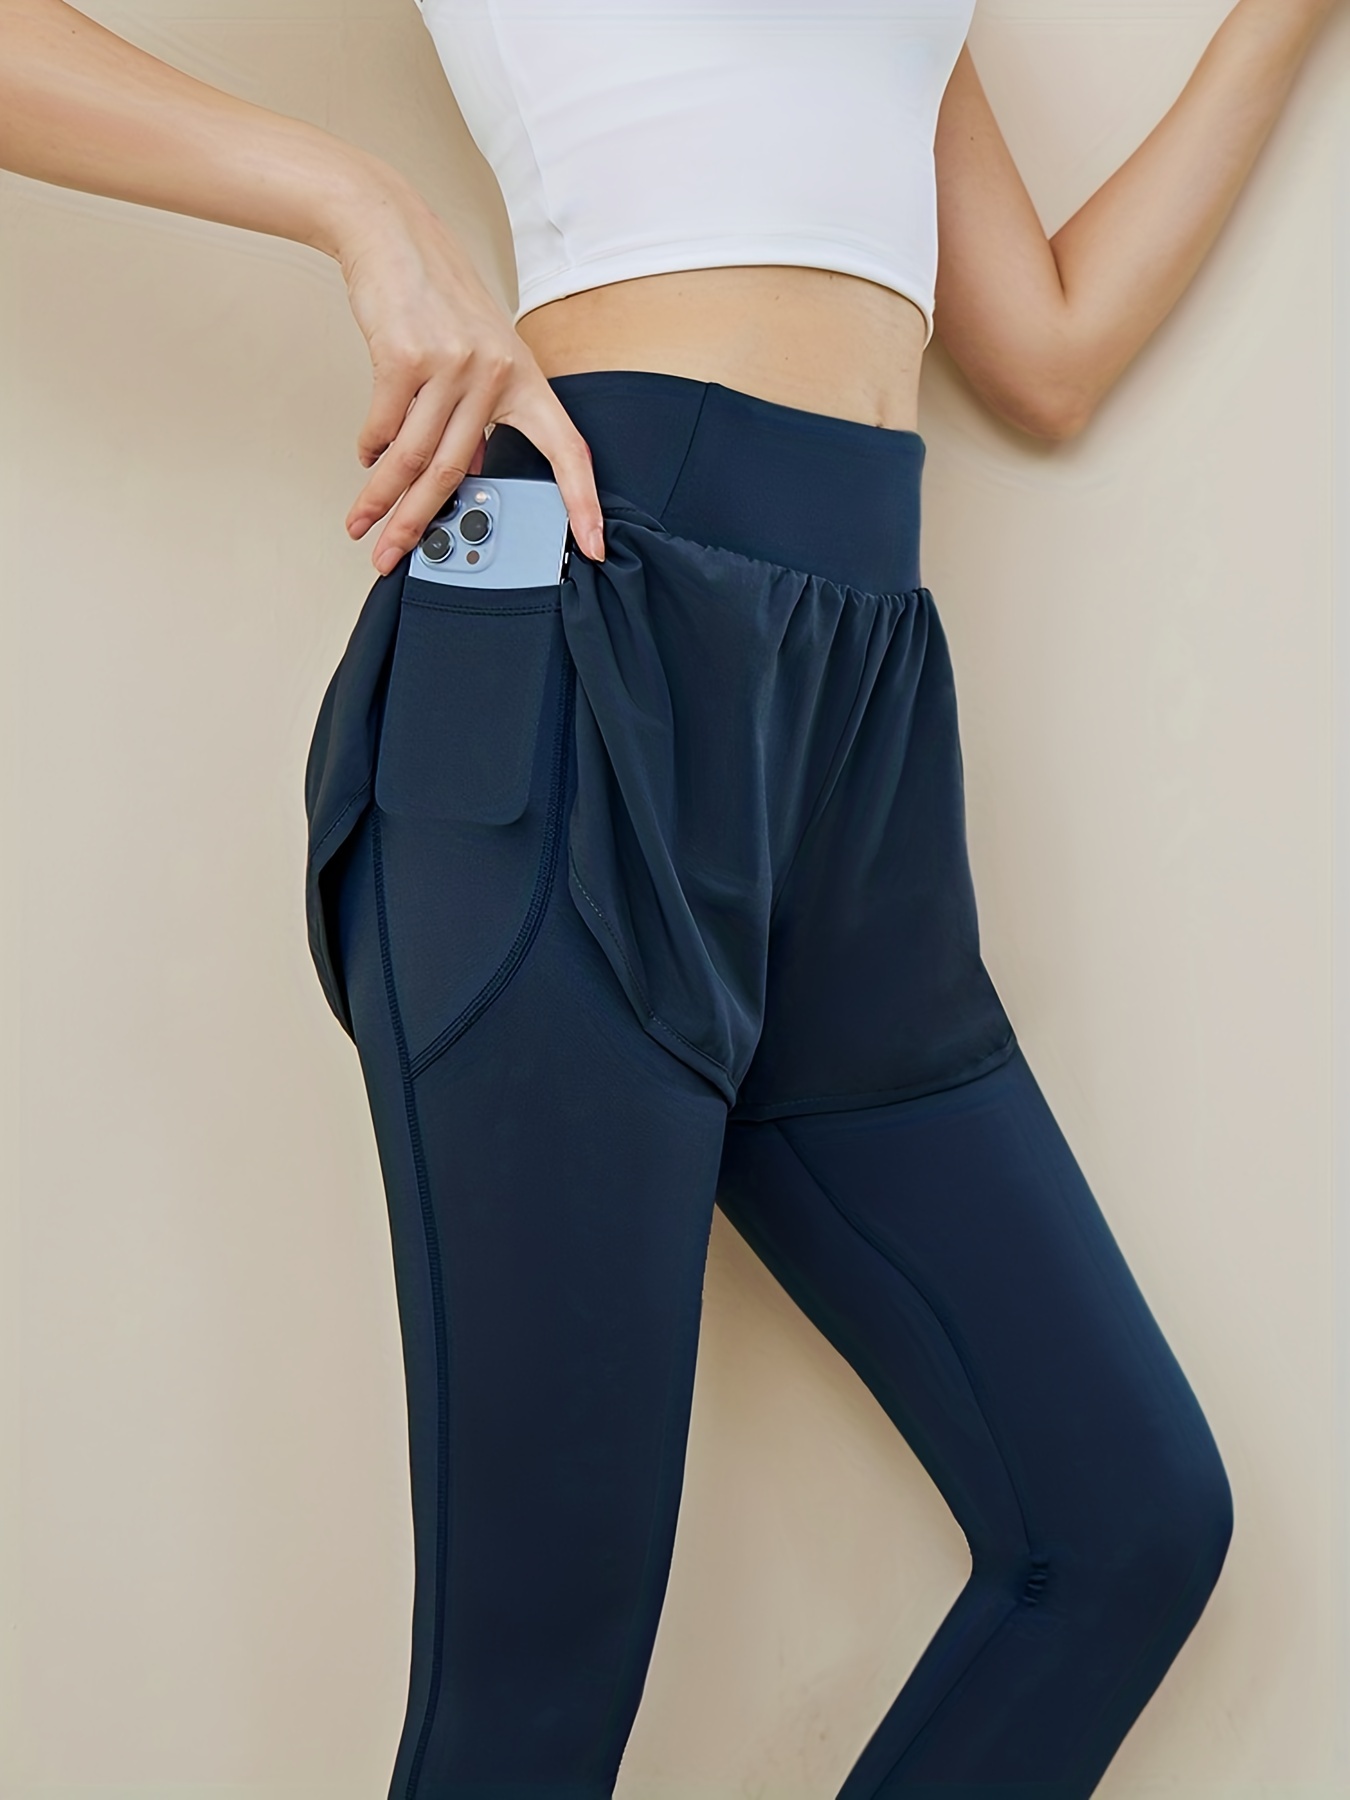 YueJi Cross Waist Yoga Pants for Women Tummy Control High Waist